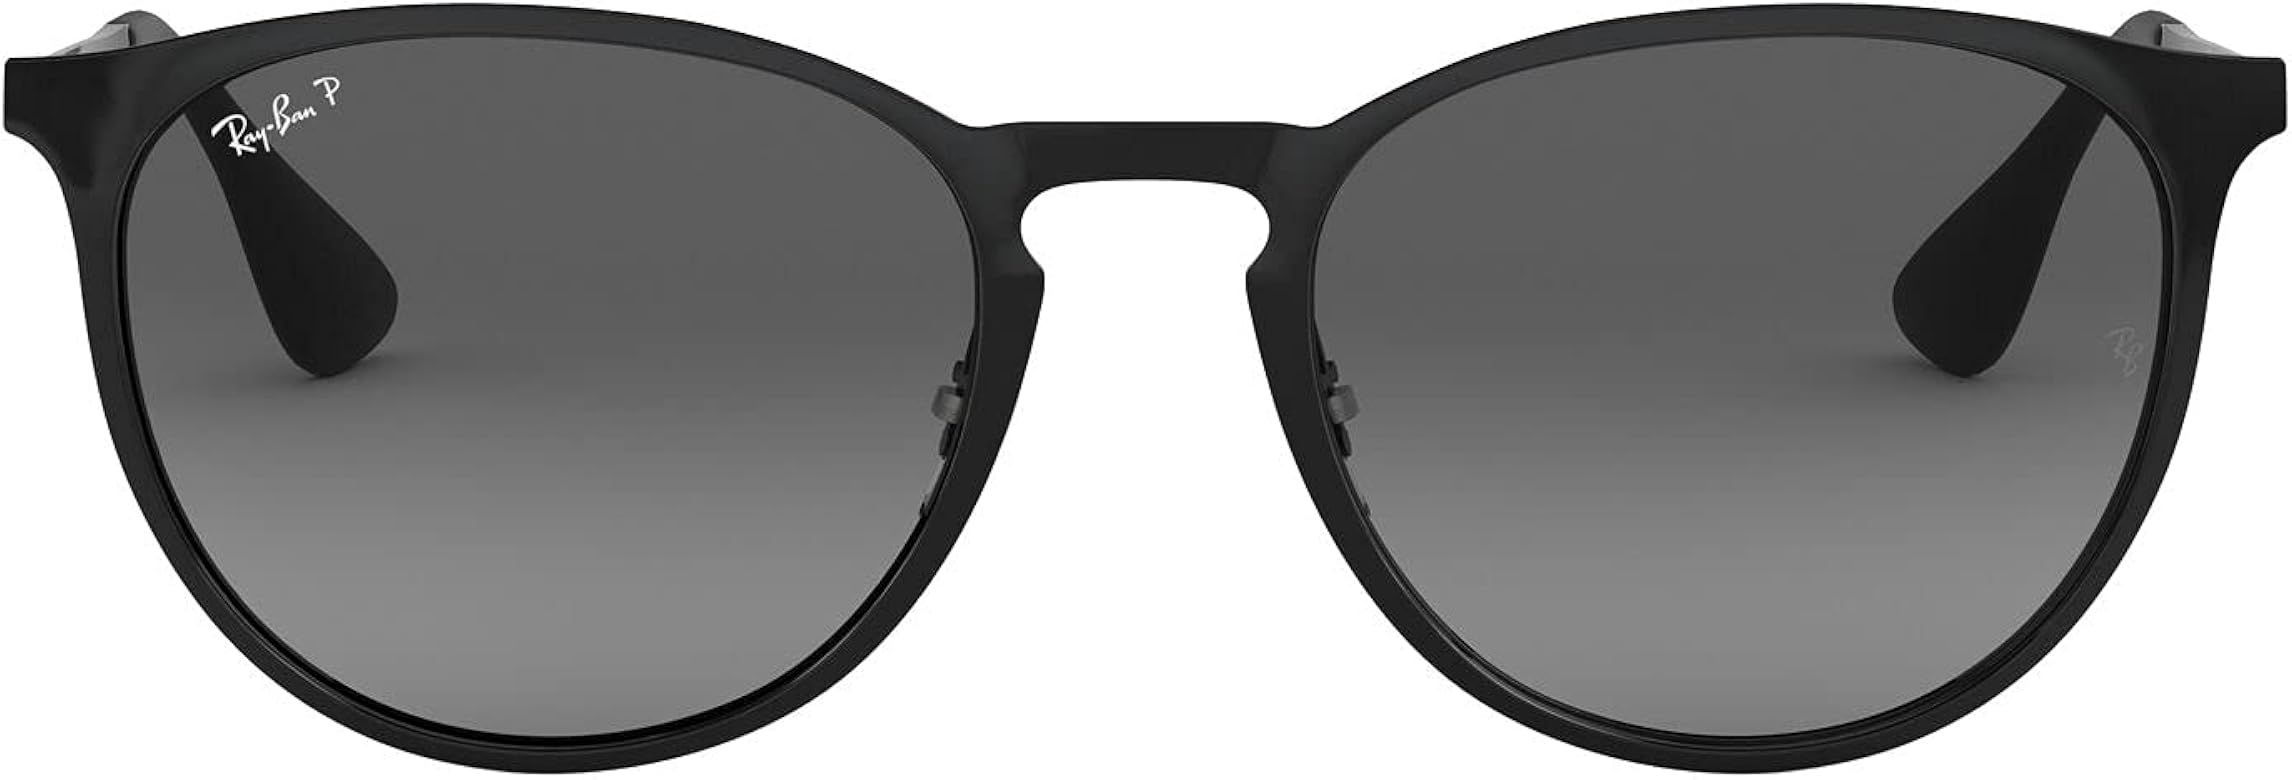 Ray-Ban RB3539 Erika Metal Round Sunglasses, Black/Polarized Light Grey Gradient Grey, 54 mm | Amazon (US)